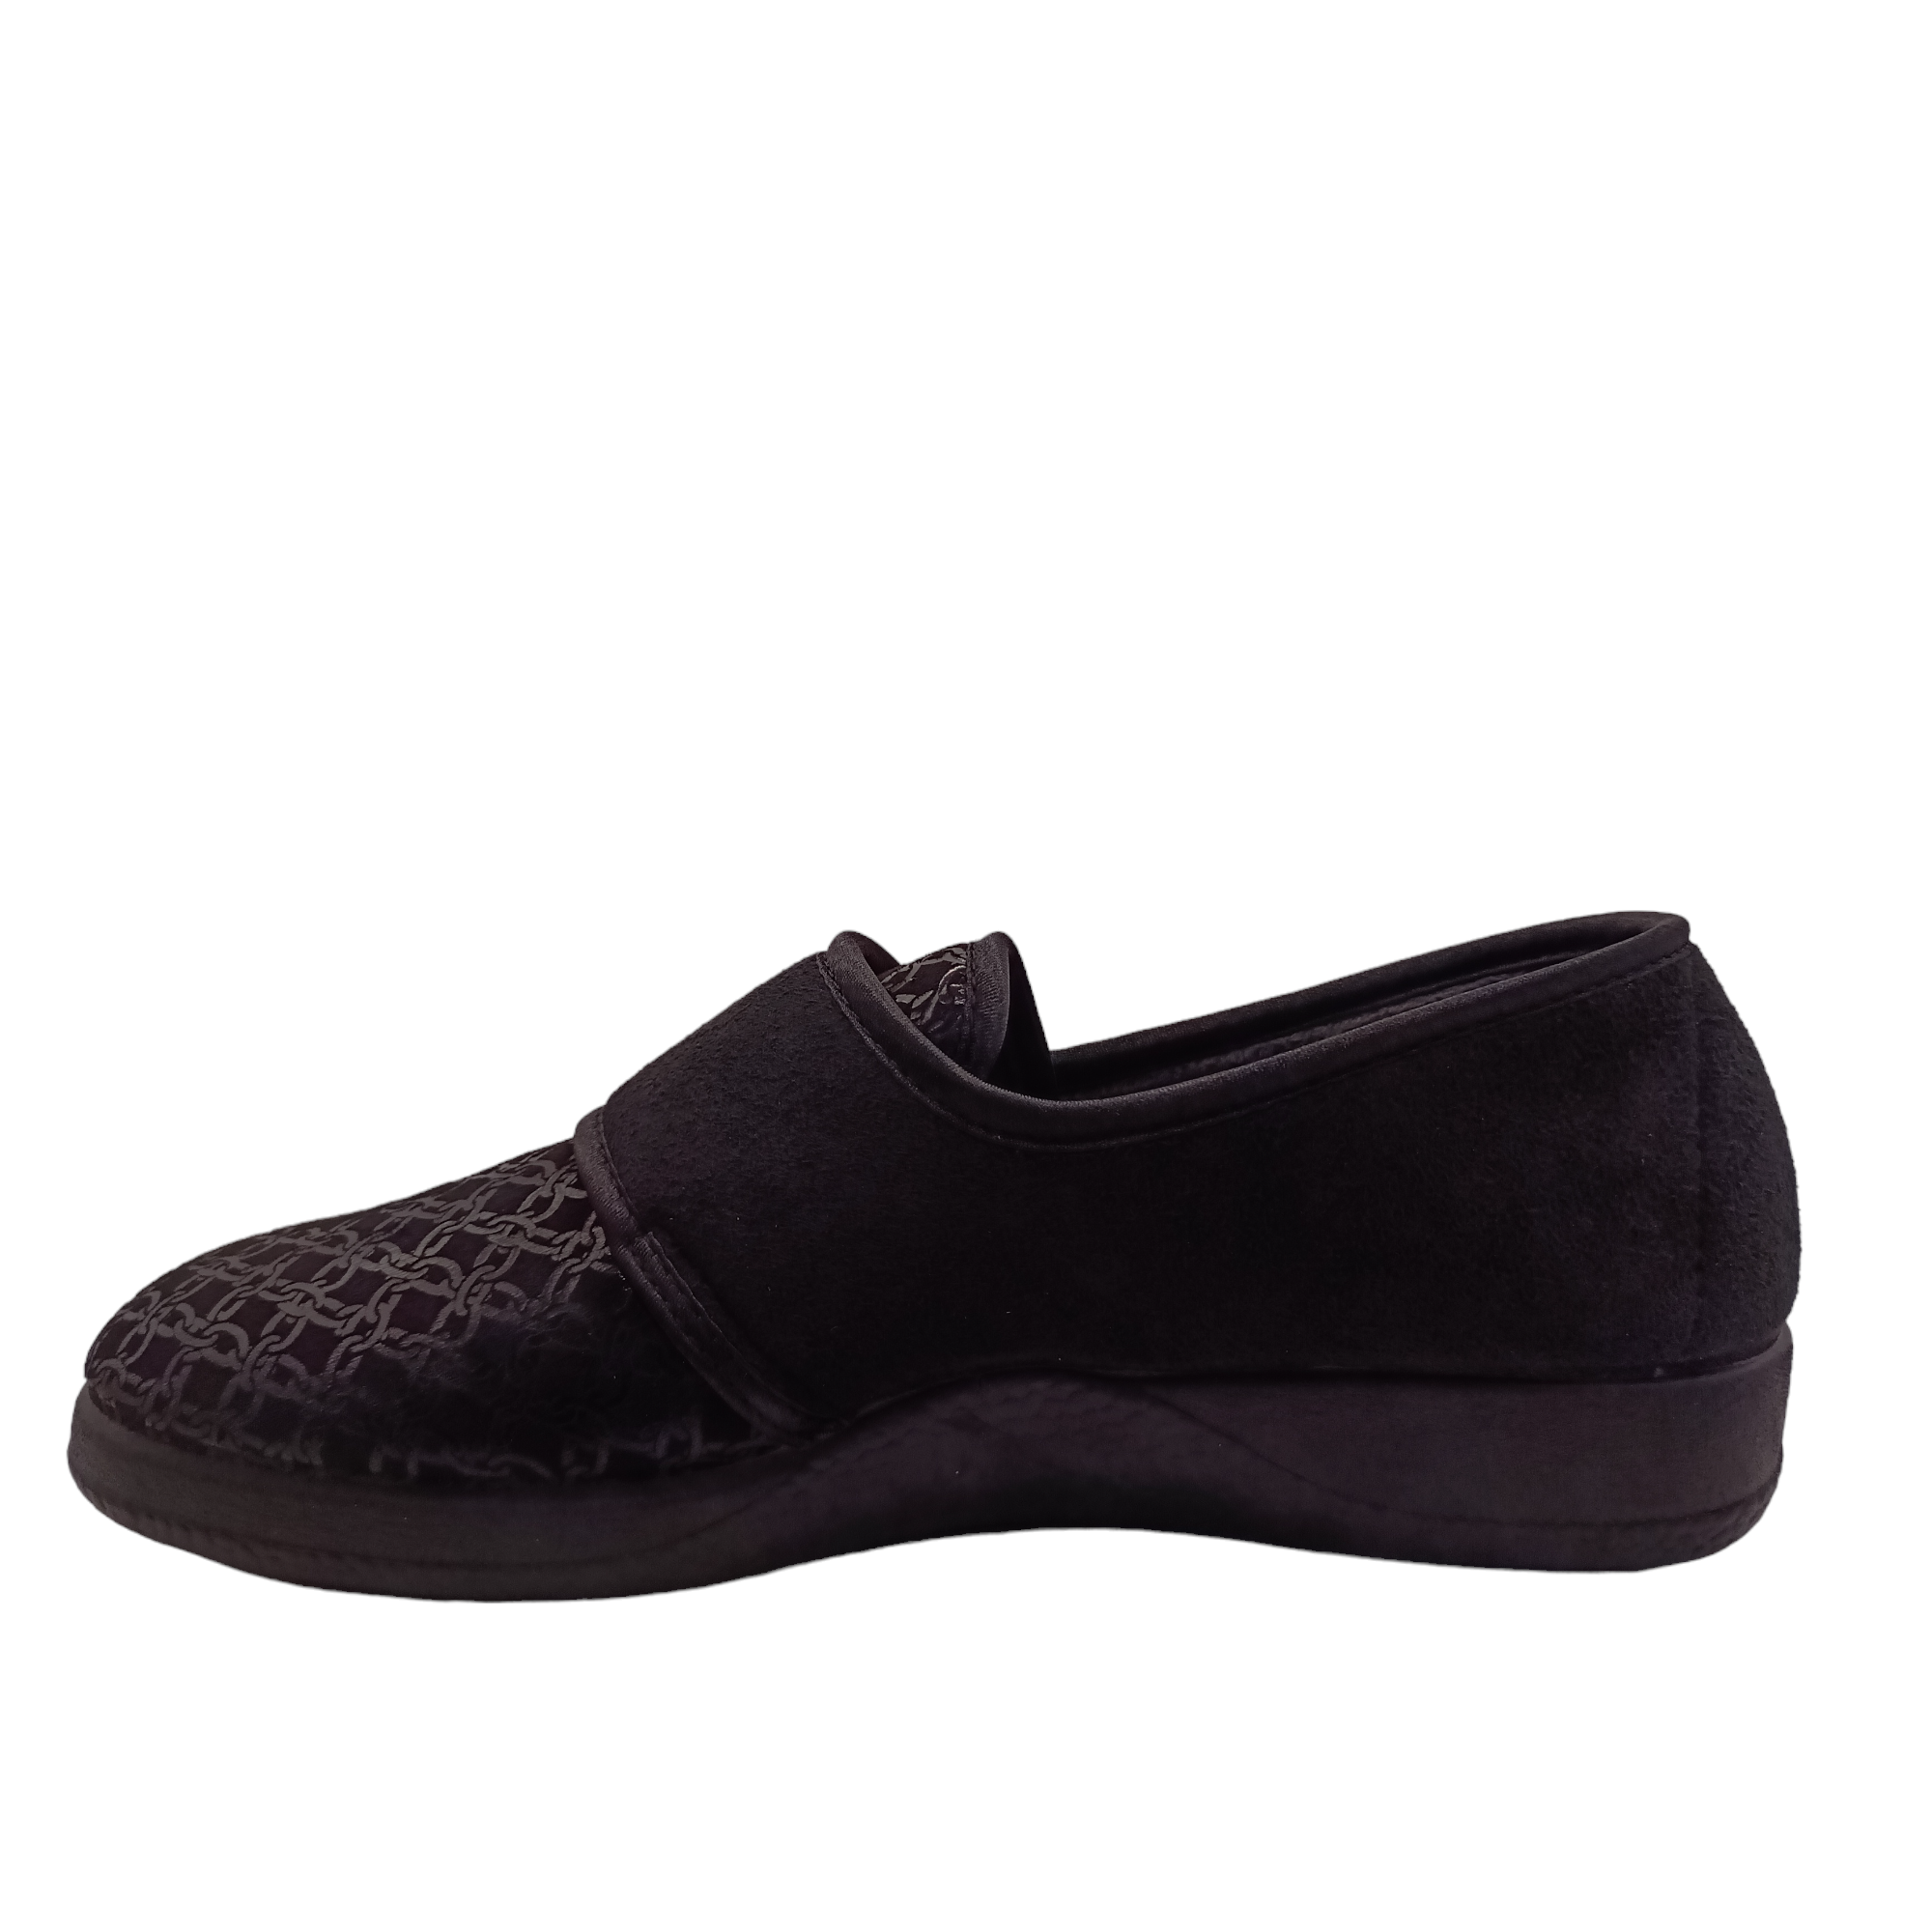 Shop Cadenas DeValverde - with shoe&me - from DeValverde - Slippers - Slipper, Winter, Womens - [collection]